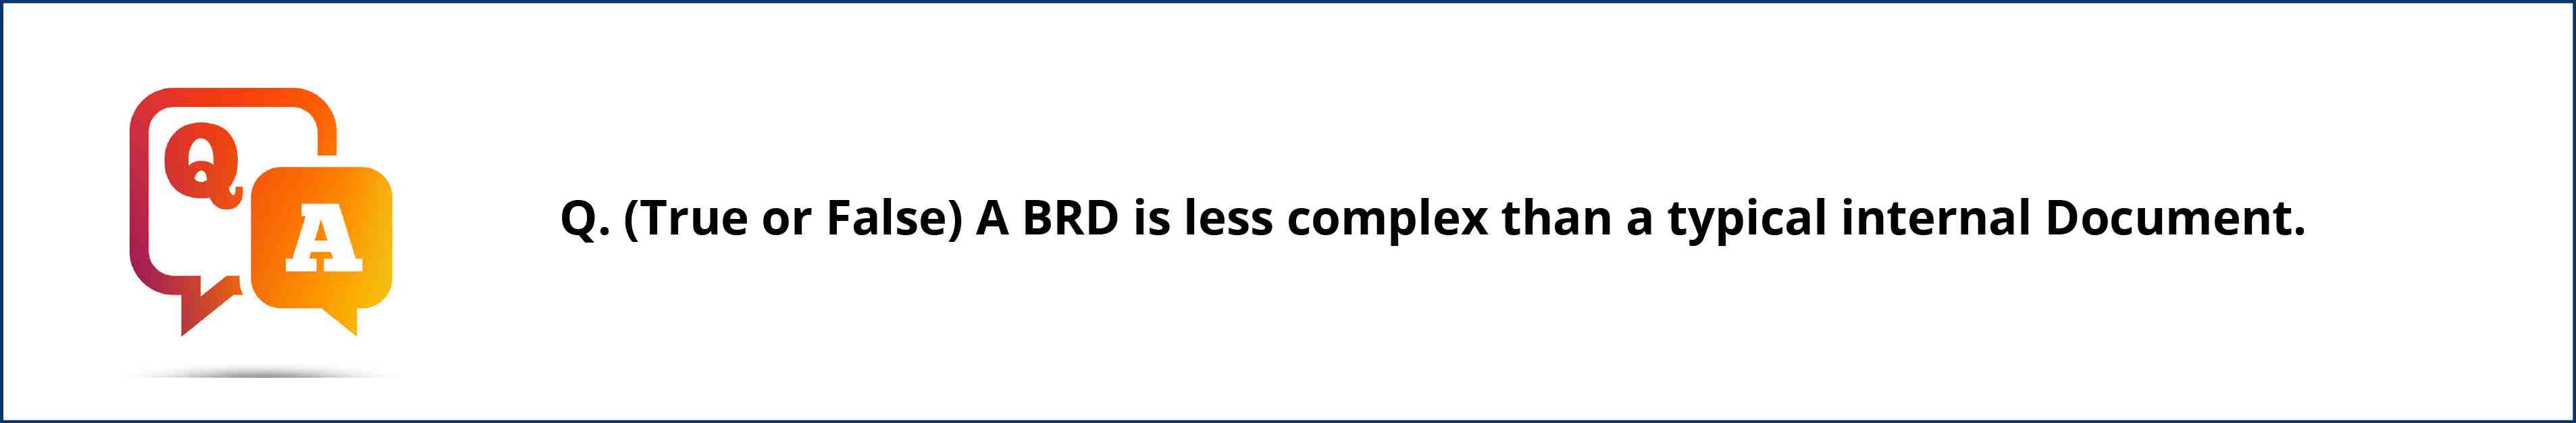 A BRD is less complex than a typical internal document